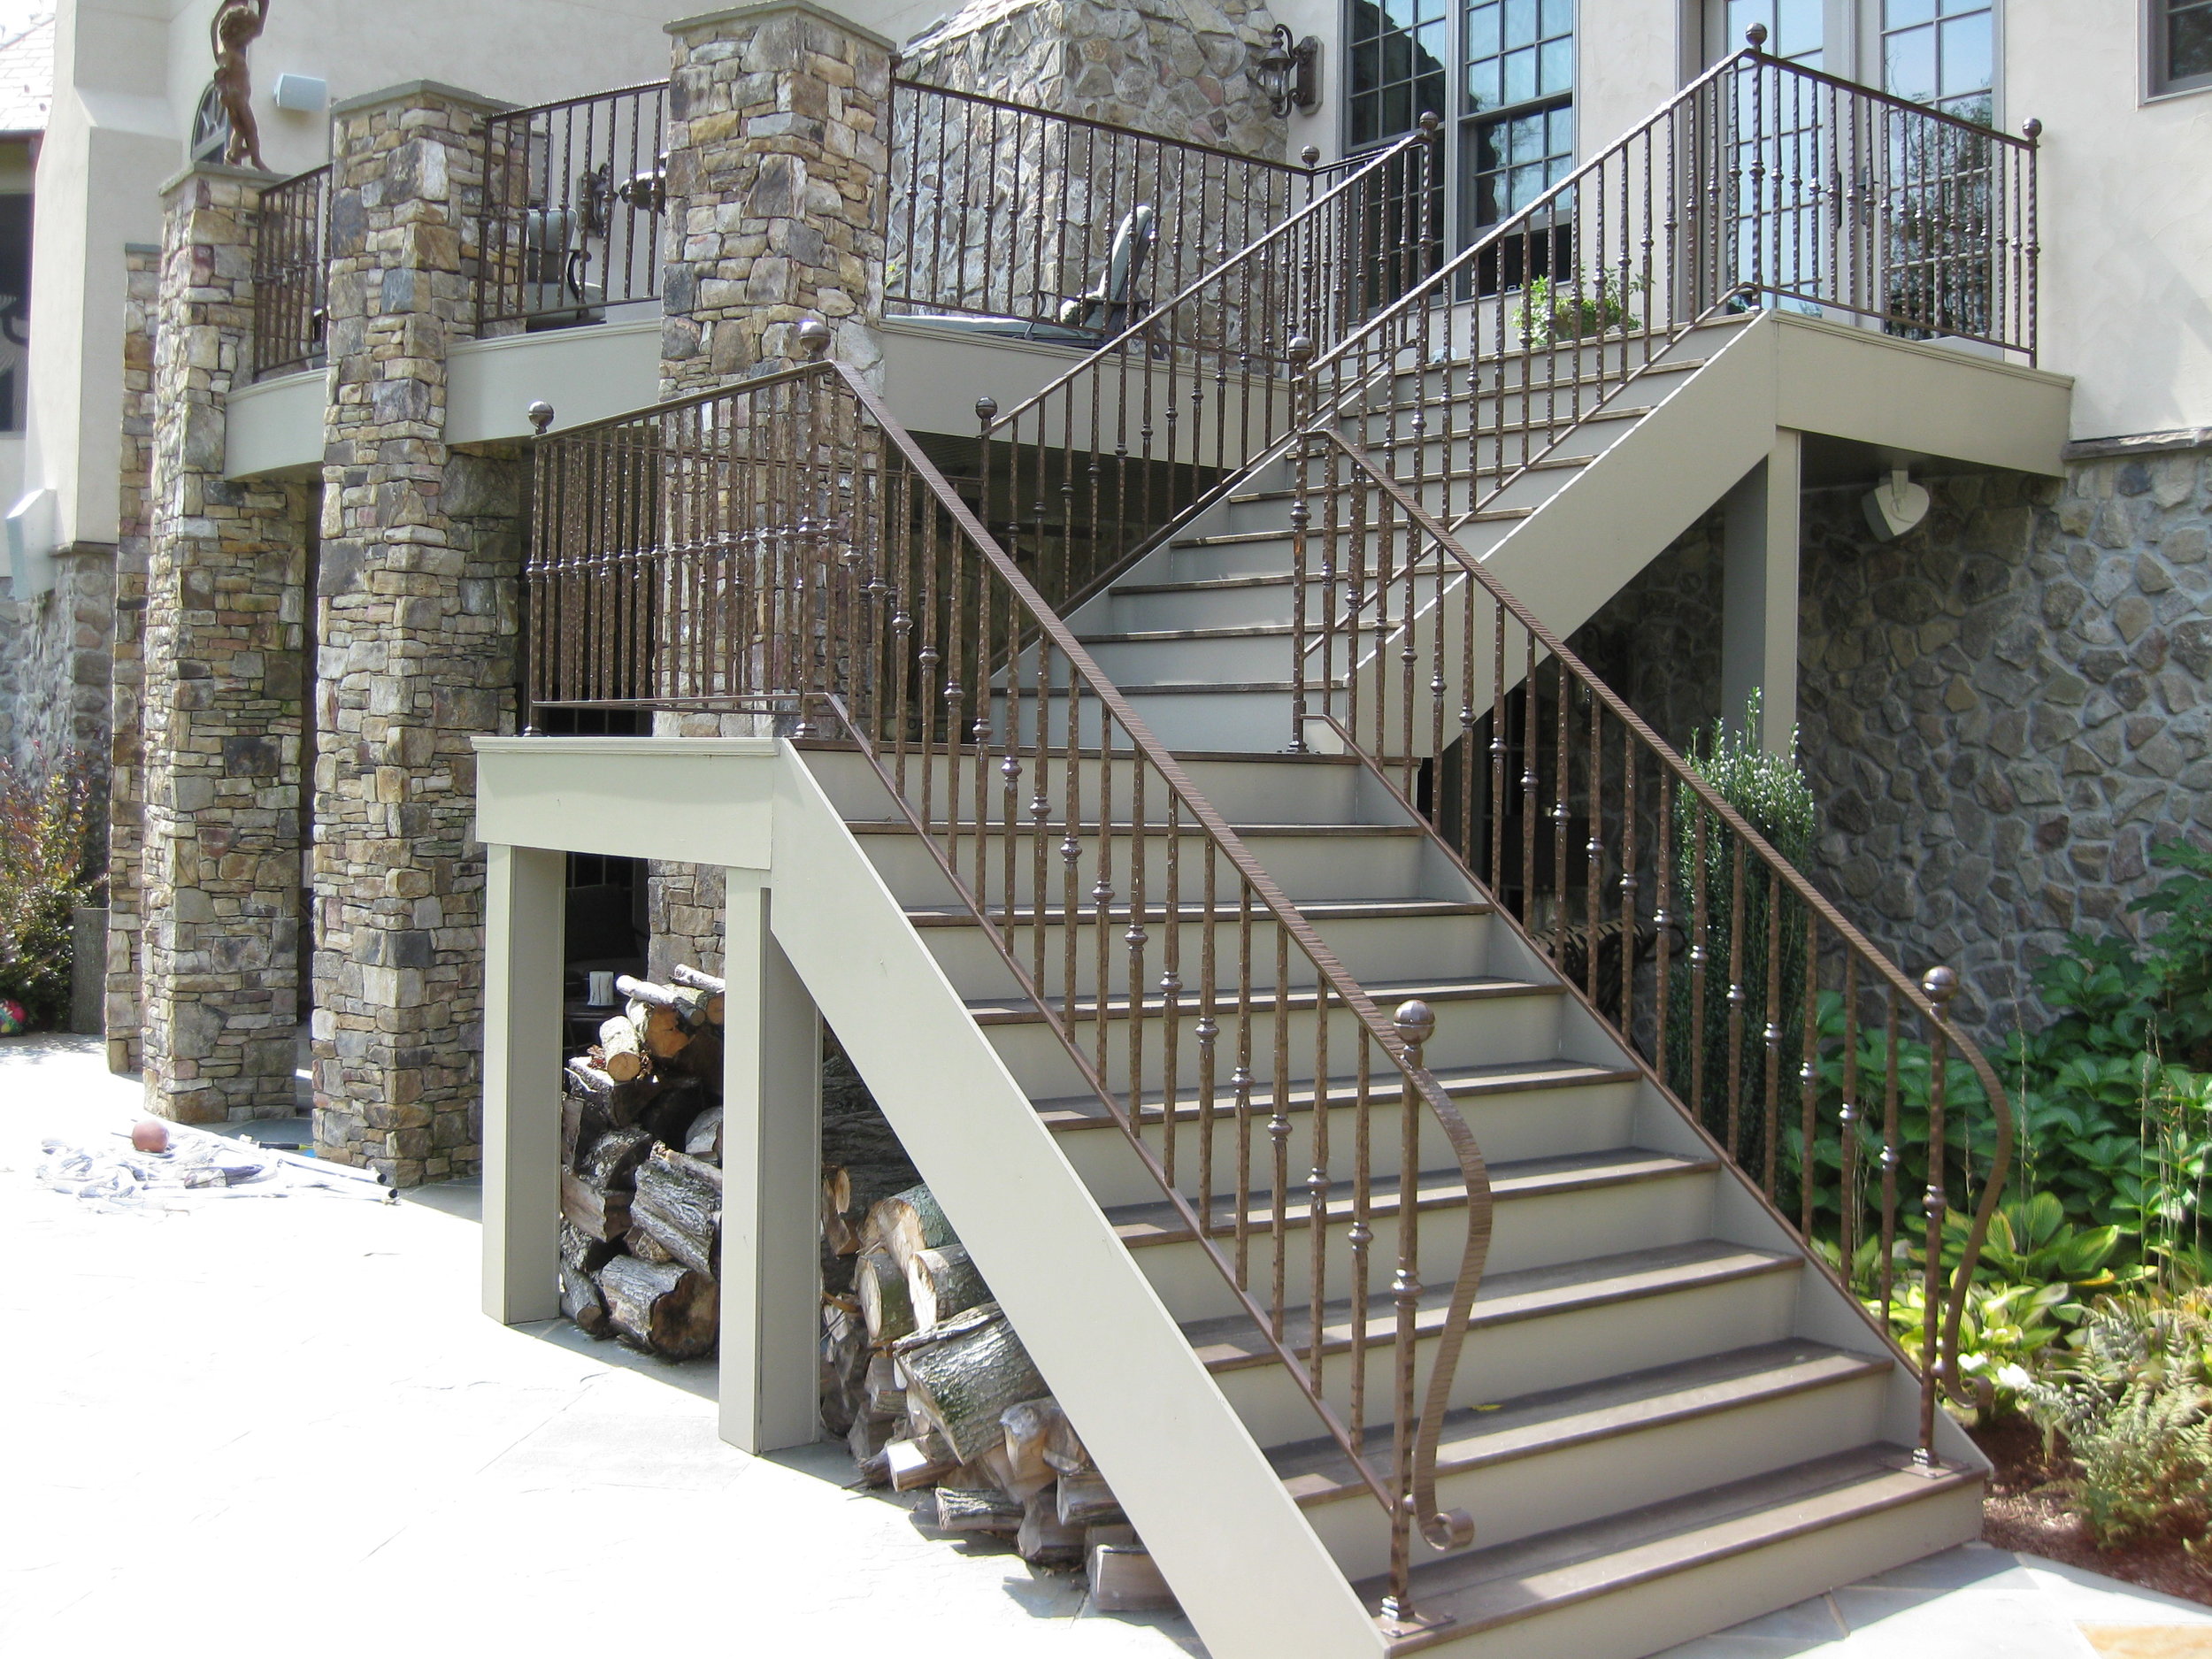 Wrought Iron Stair Spindles Garden & Decking Balustrade Metal Stair Spindles 